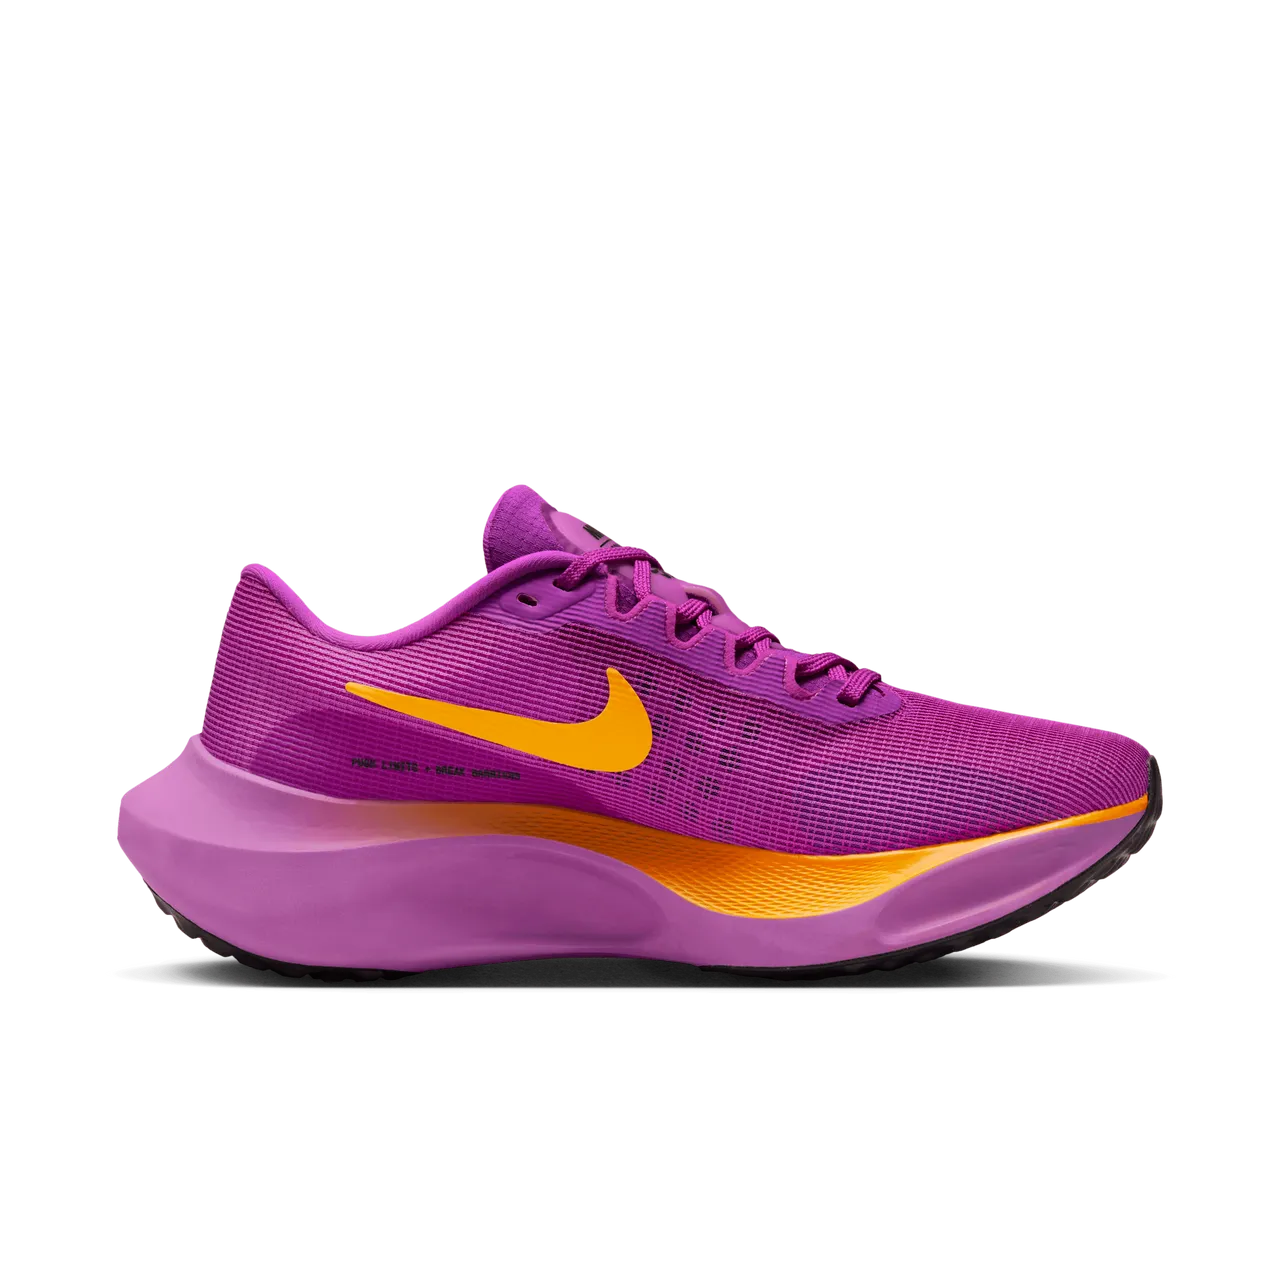 Nike Zoom Fly 5 Women's Road Running Shoes - Purple